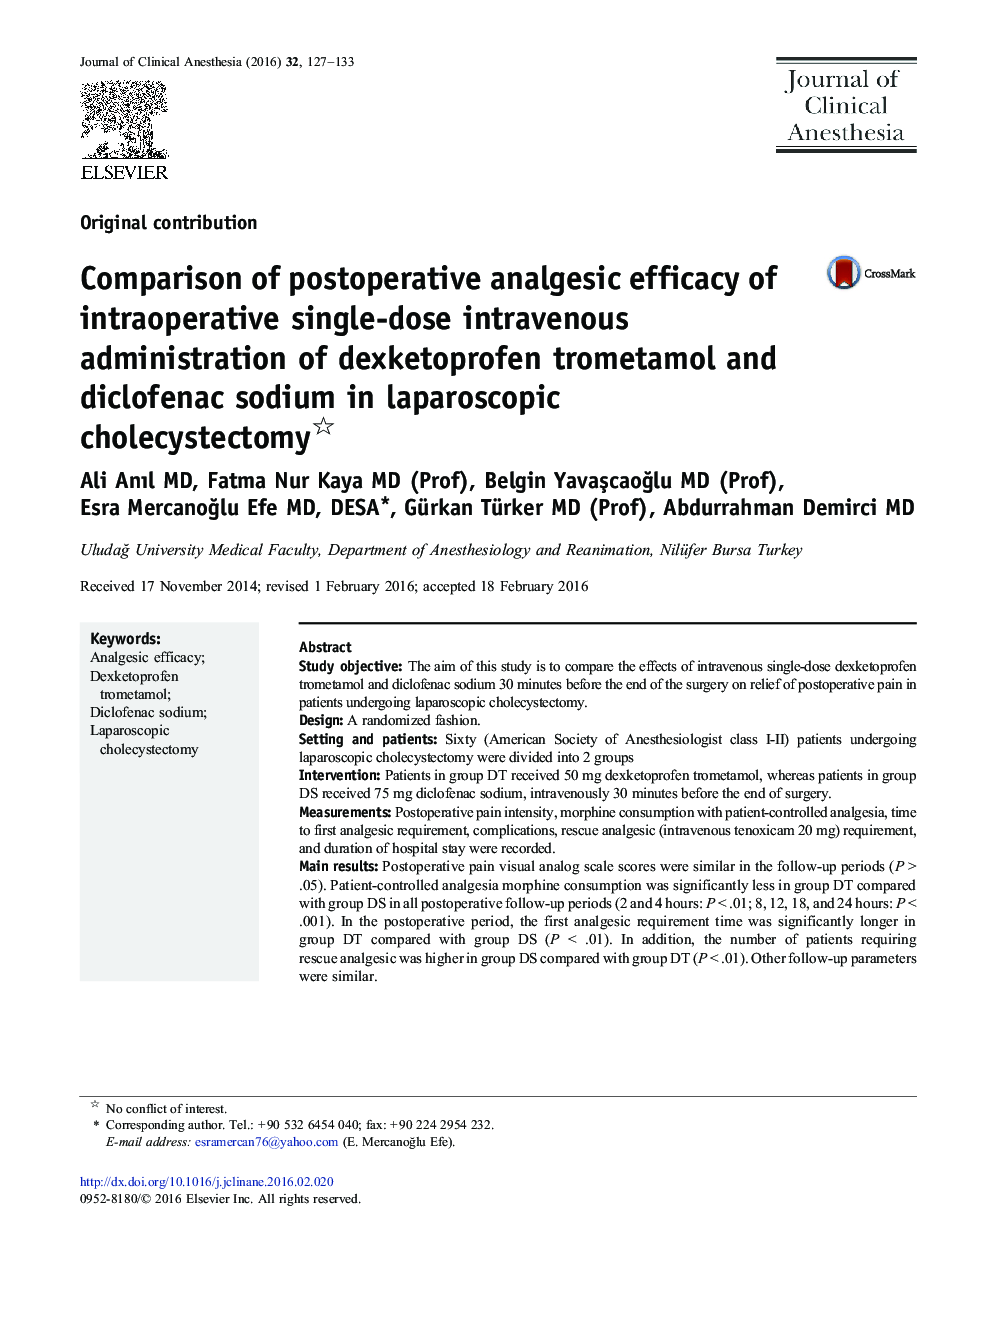 Comparison of postoperative analgesic efficacy of intraoperative single-dose intravenous administration of dexketoprofen trometamol and diclofenac sodium in laparoscopic cholecystectomy